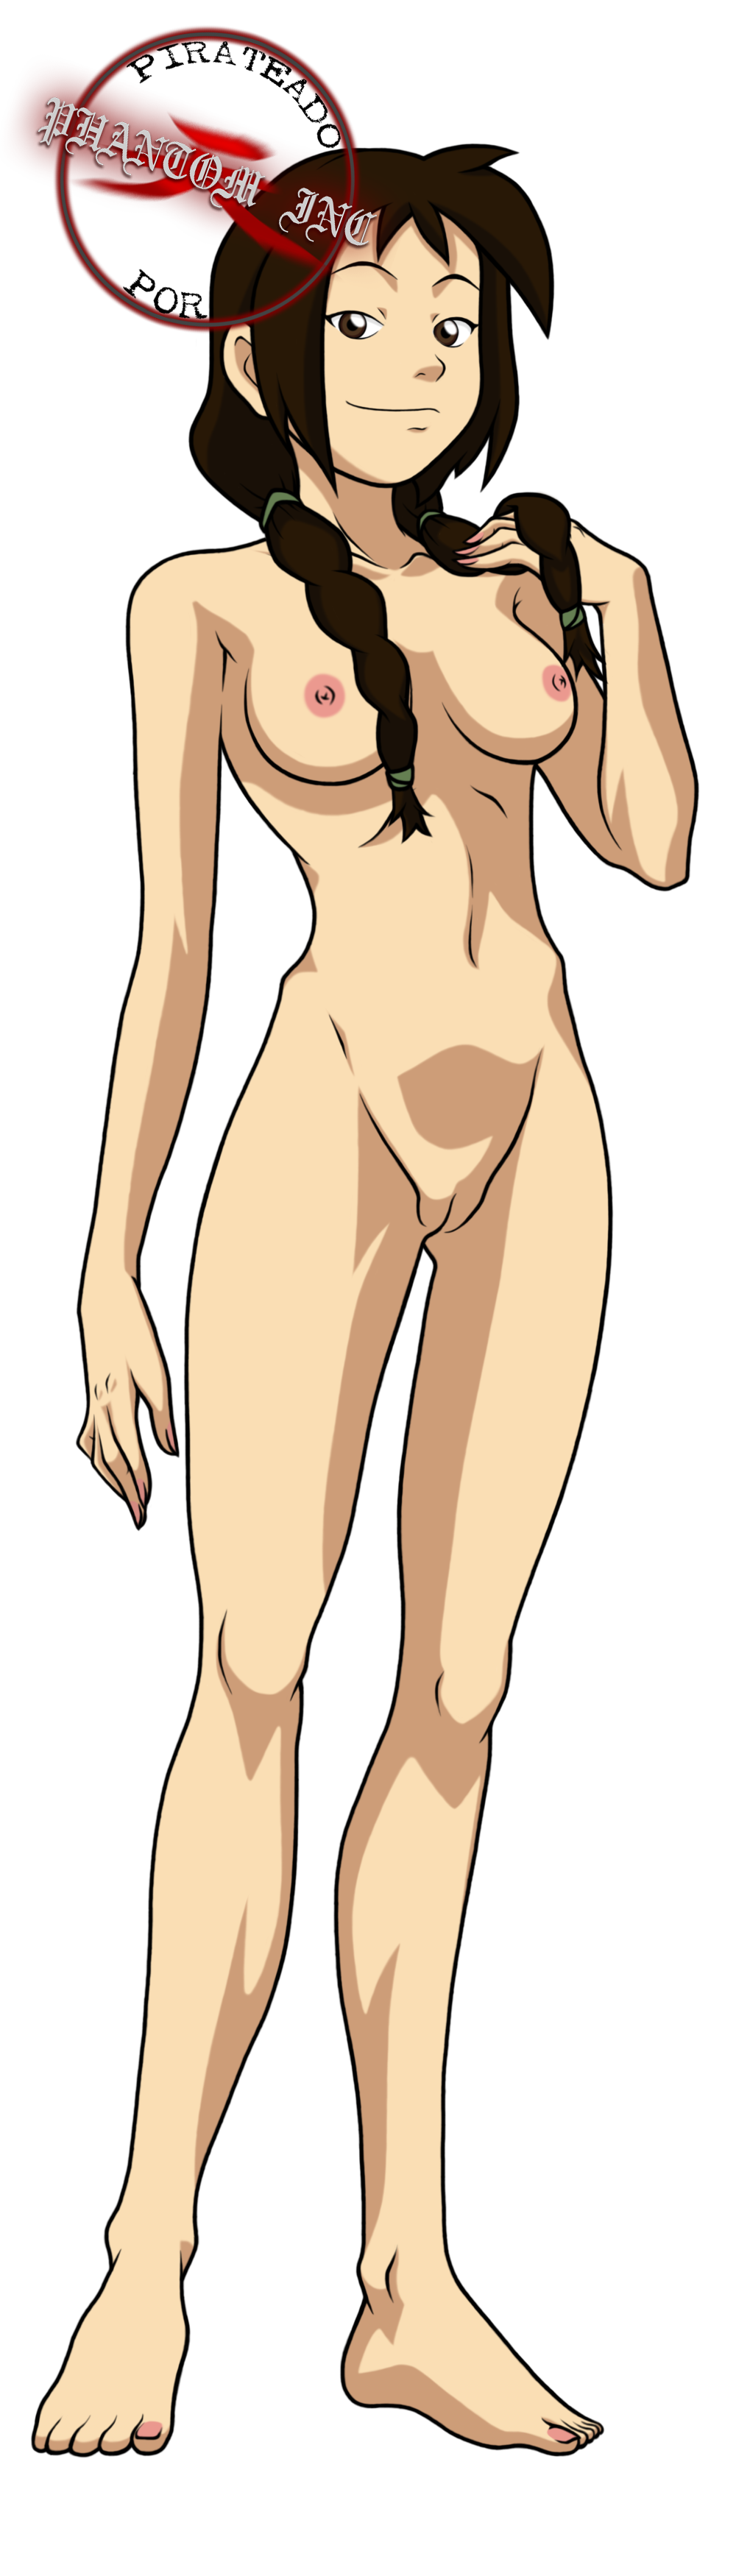 busty teen aus avatar Cartoon sieht sehr sexy